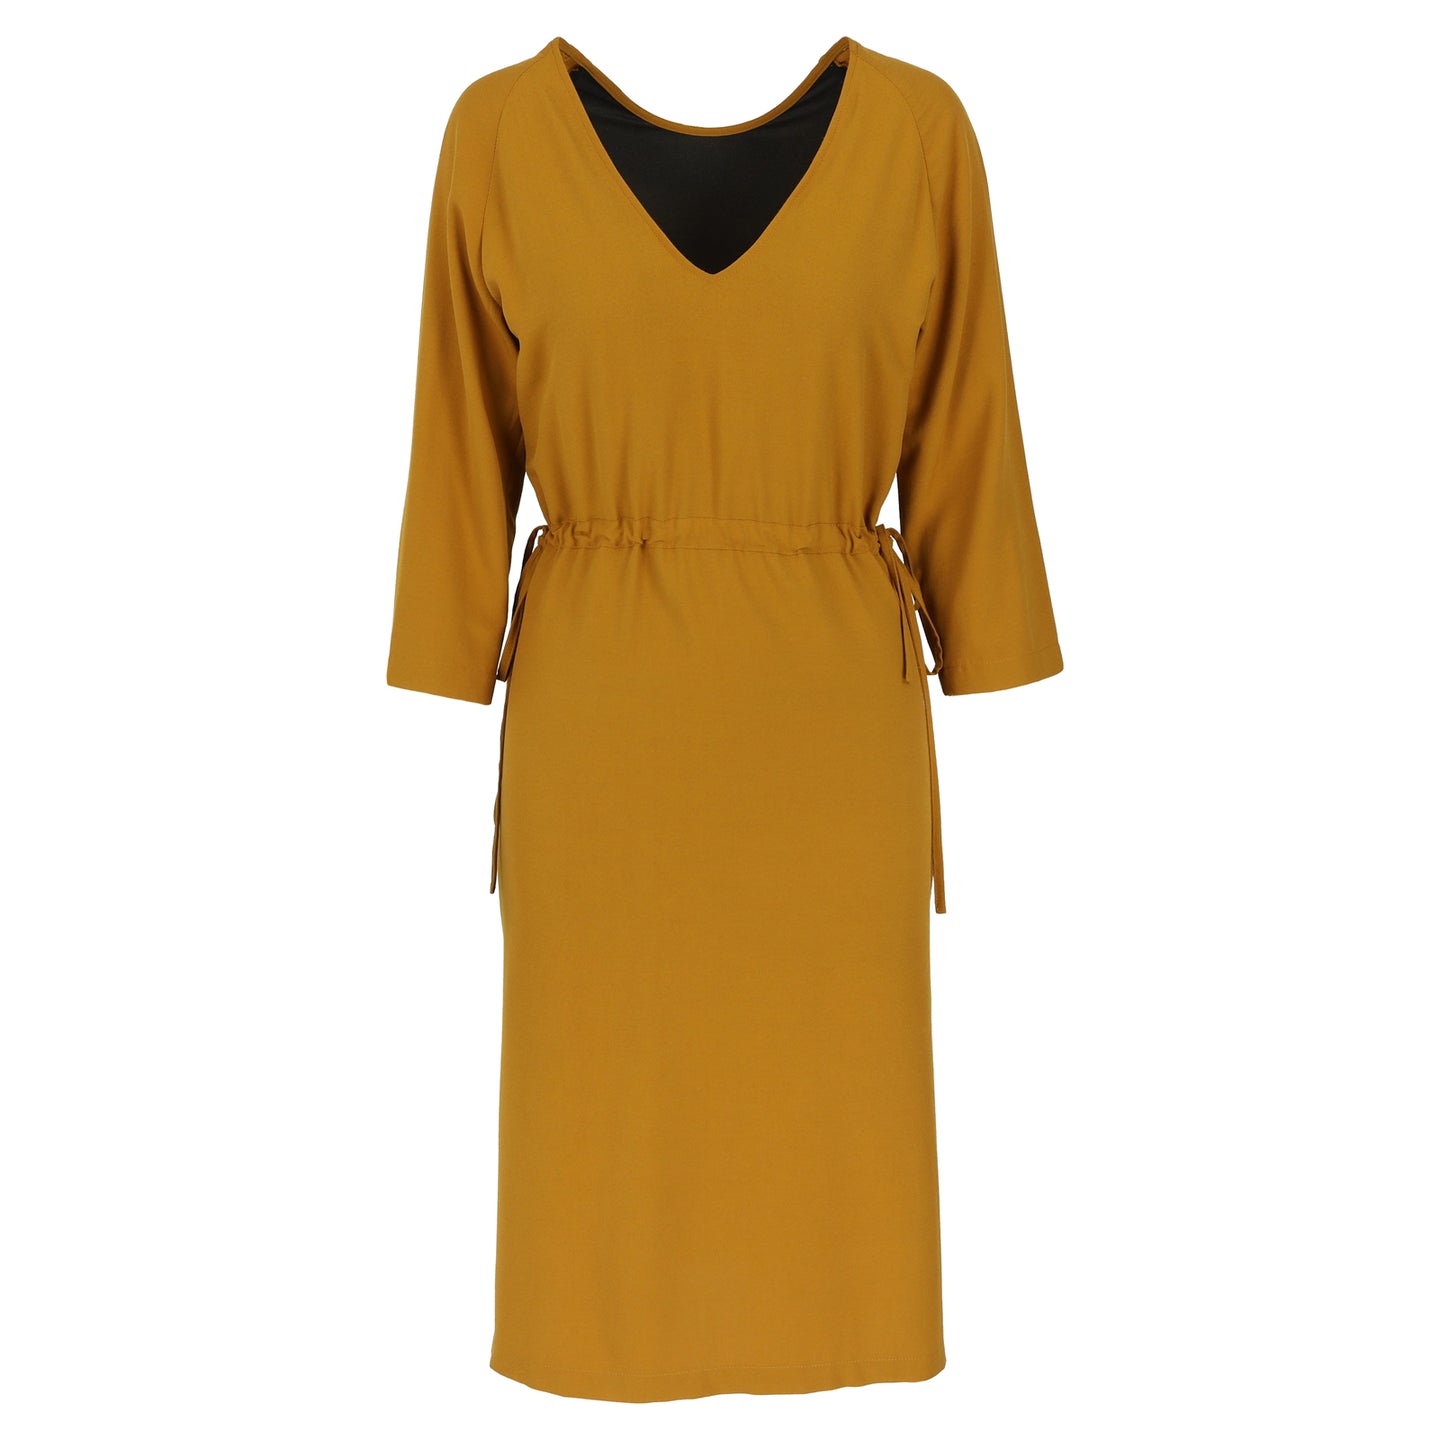 Tango dress ocher - Last size: 36